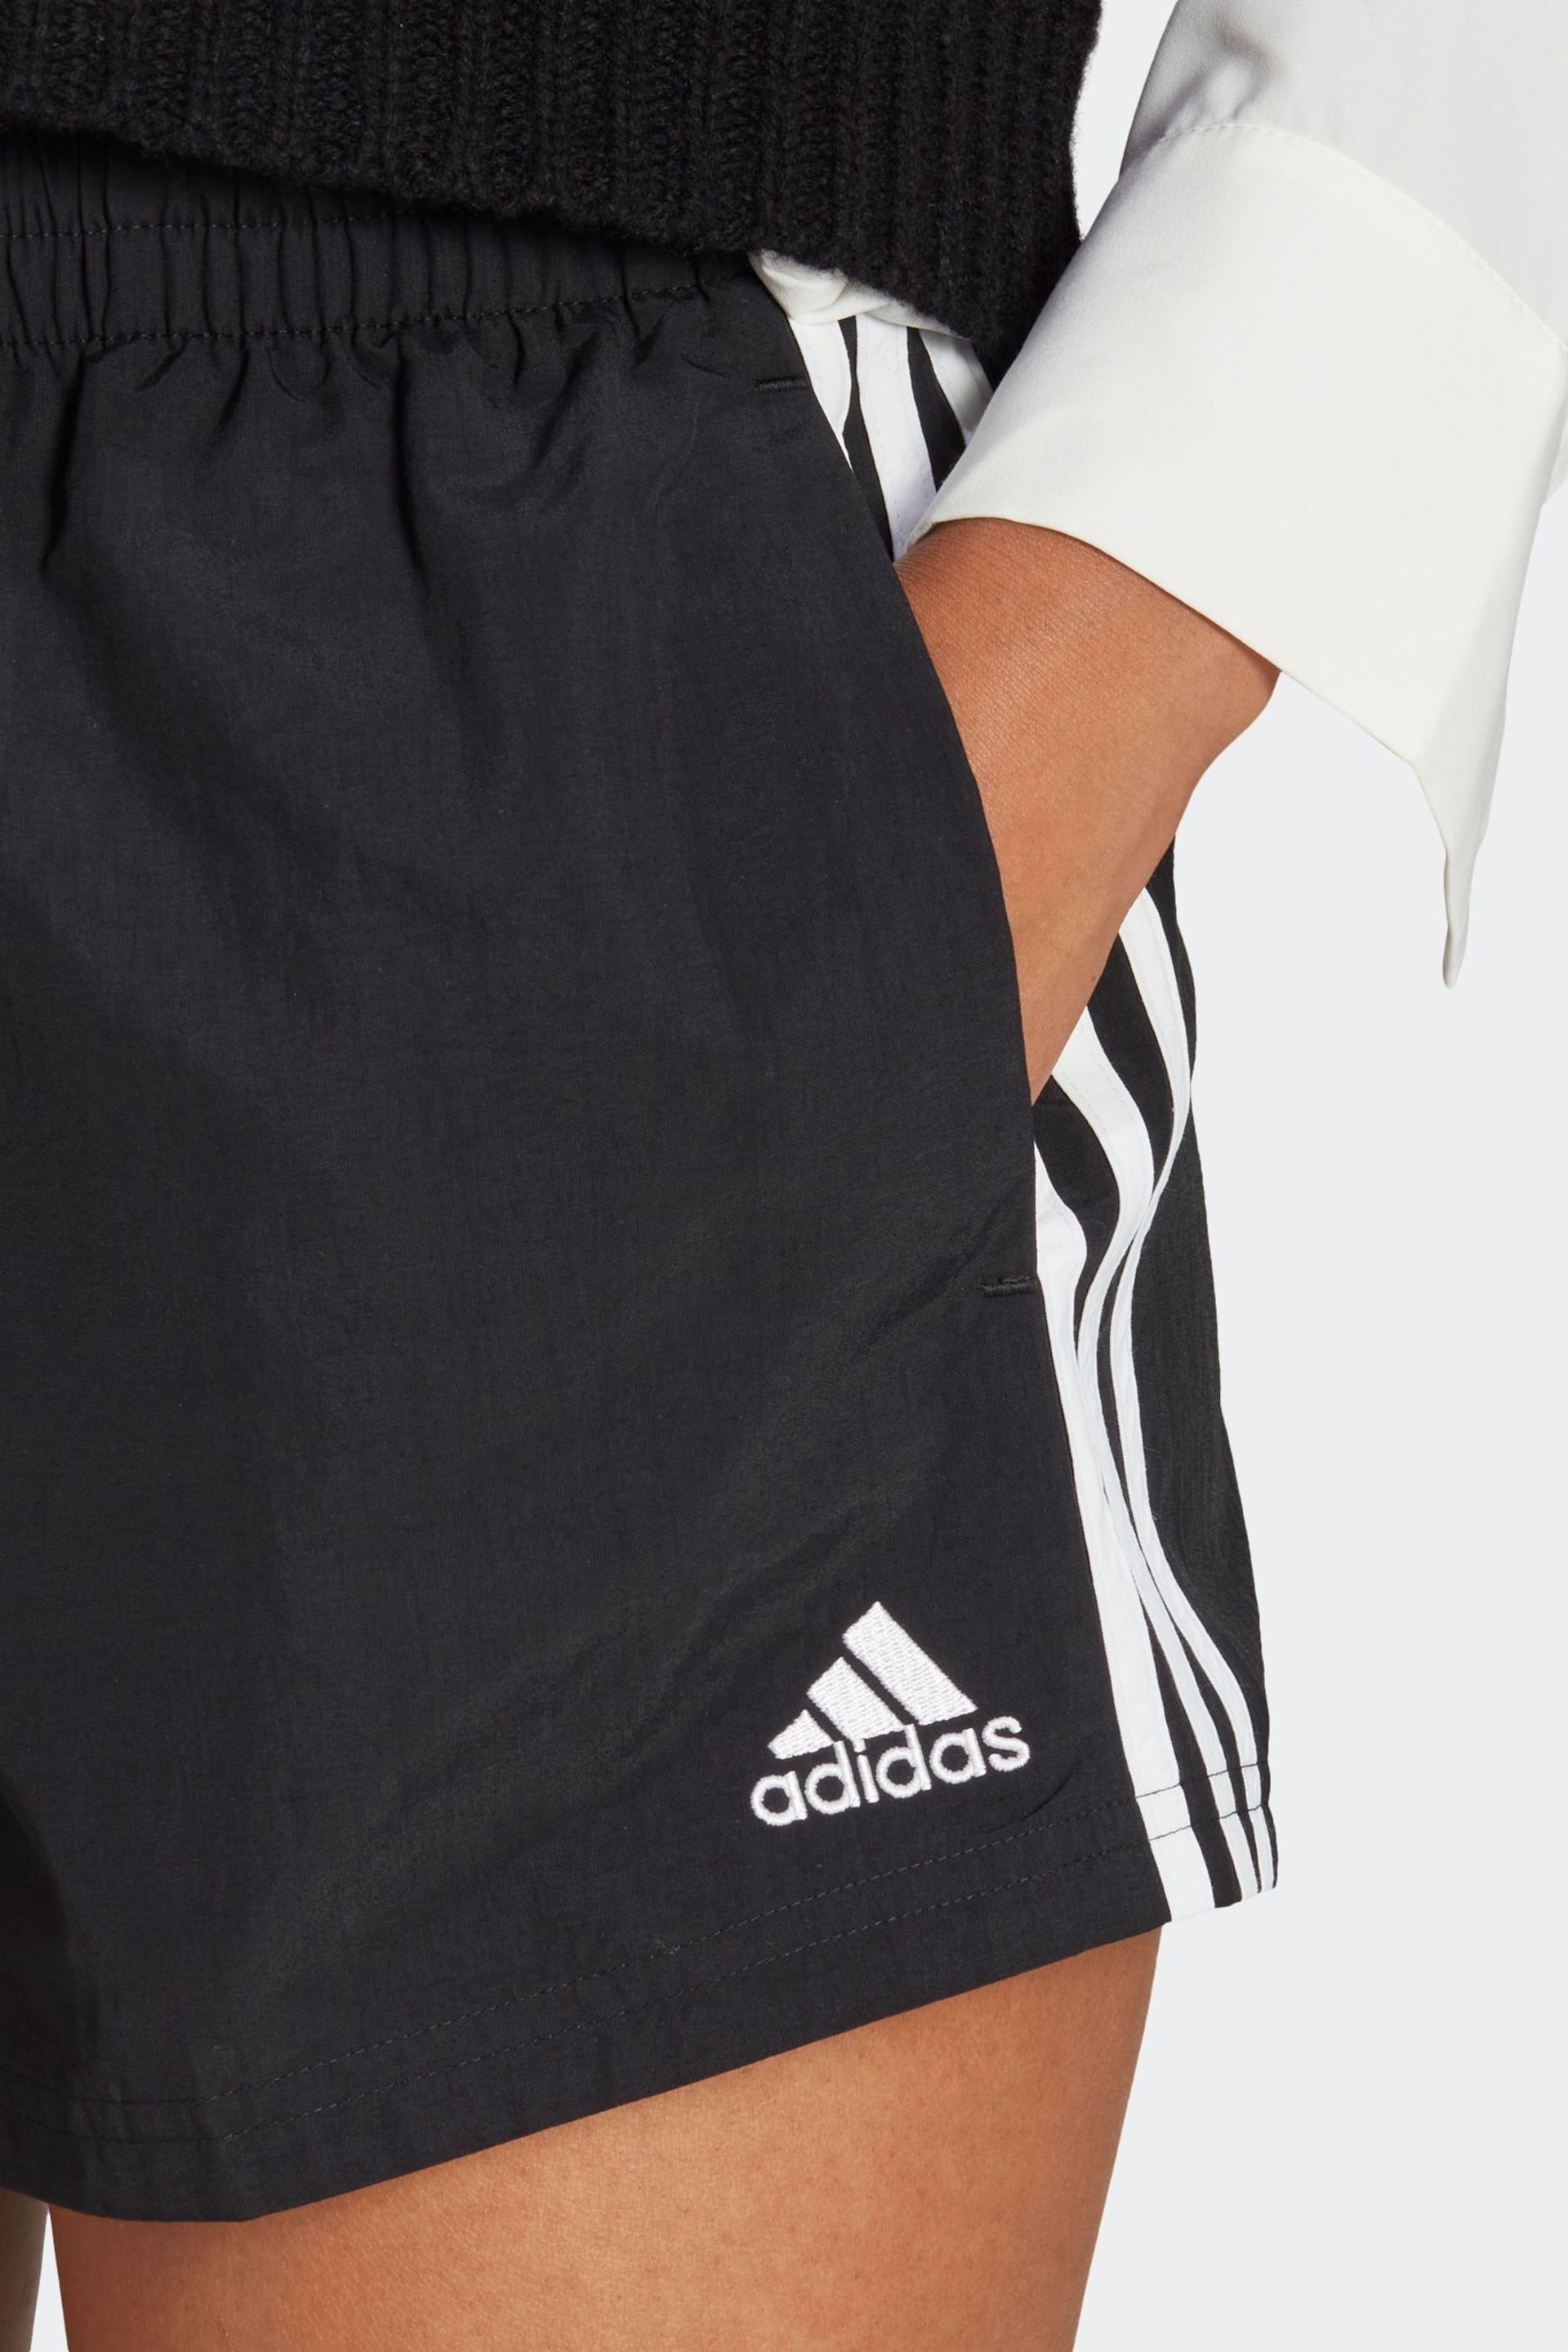 adidas Black Sportswear Essentials 3-Stripes Woven Shorts - Image 4 of 6